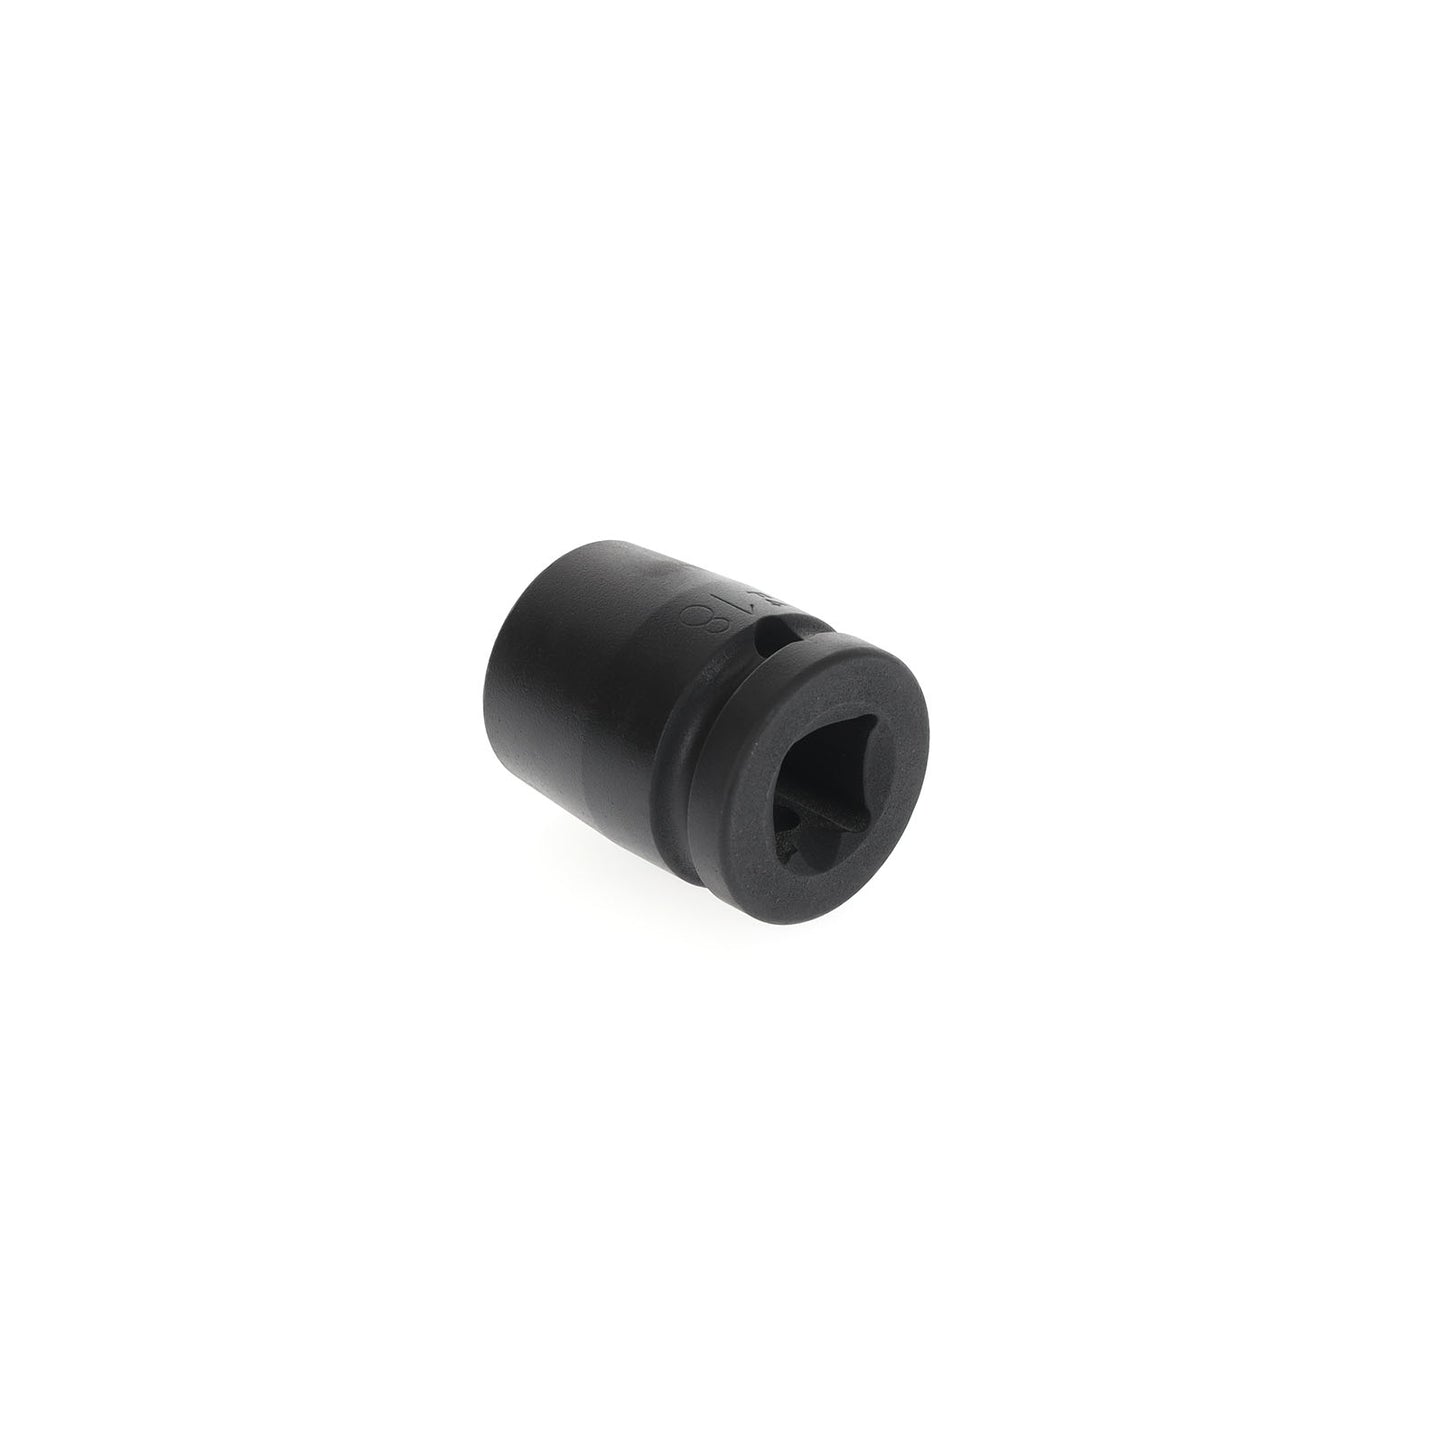 GEDORE K 19 18 - Hexagonal Impact Socket 1/2", 18 mm (6160950)